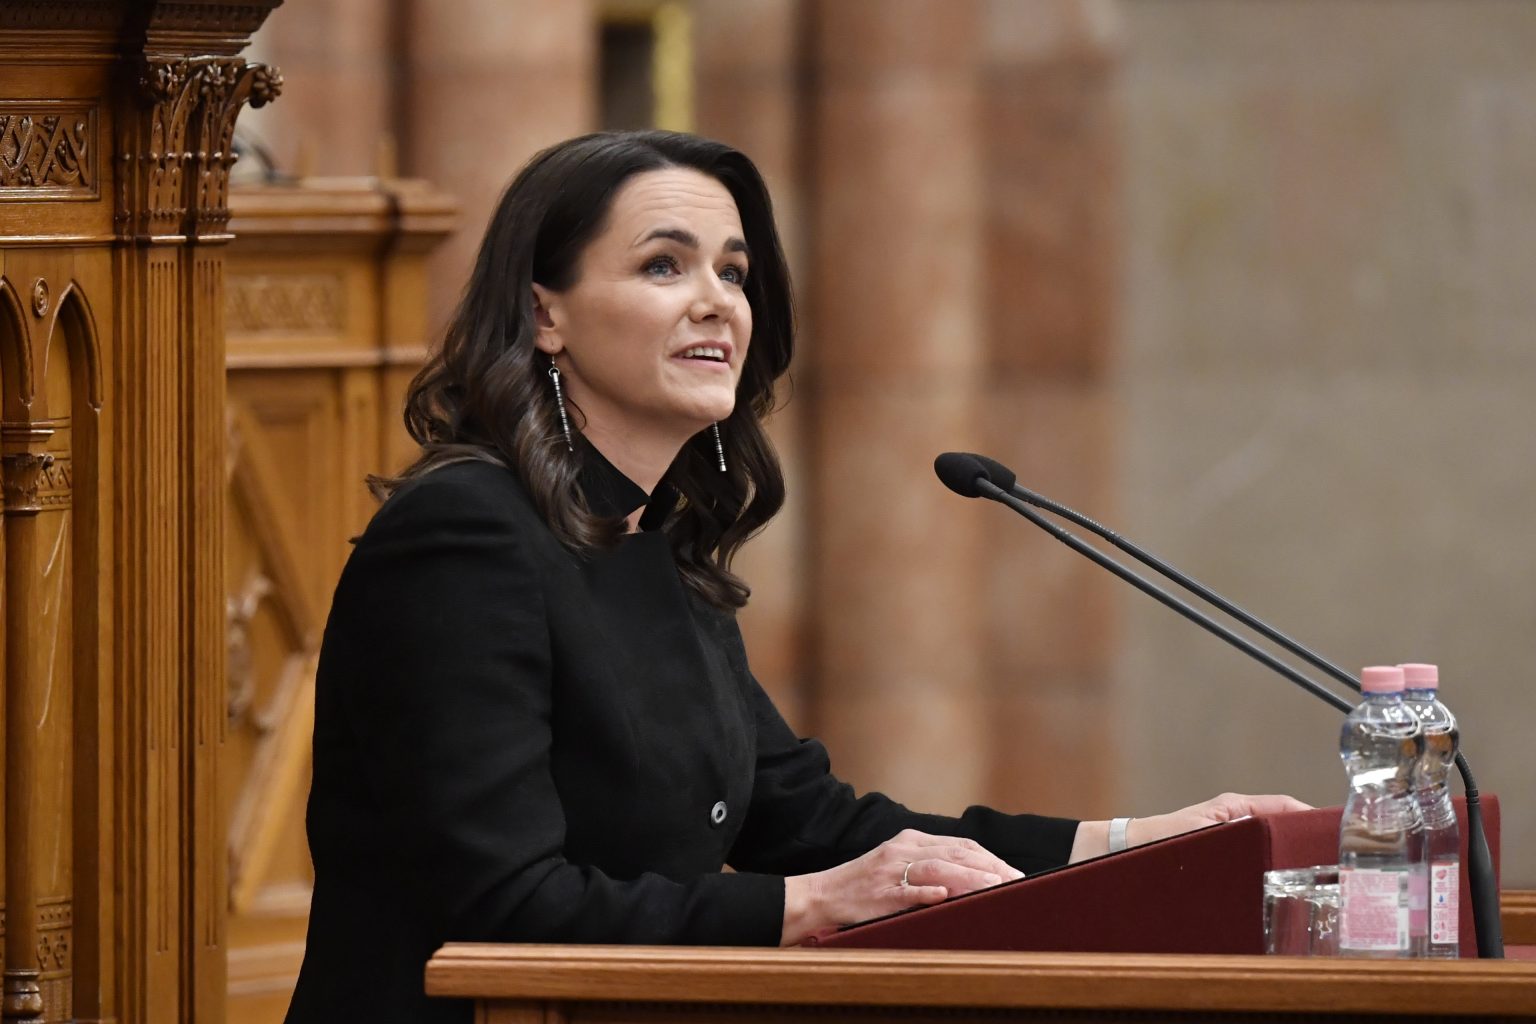 Hungarian Opinion: Katalin Novák Inaugurated as Hungary's First Female President